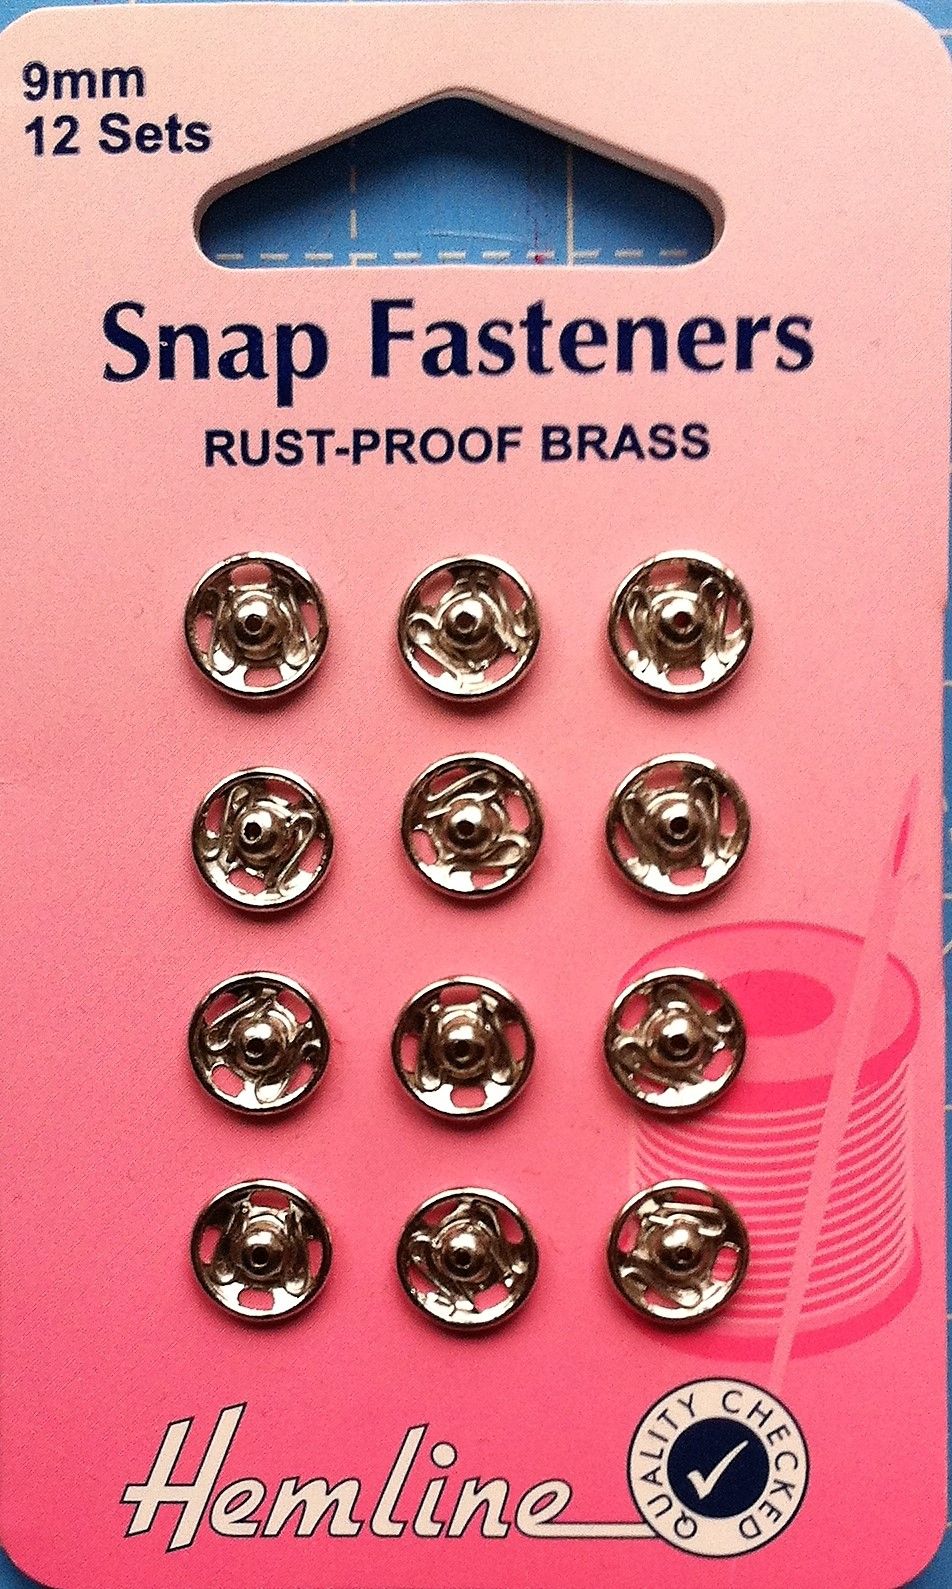 Snap fasteners by Hemline 9mm 12 x sets rust proof brass